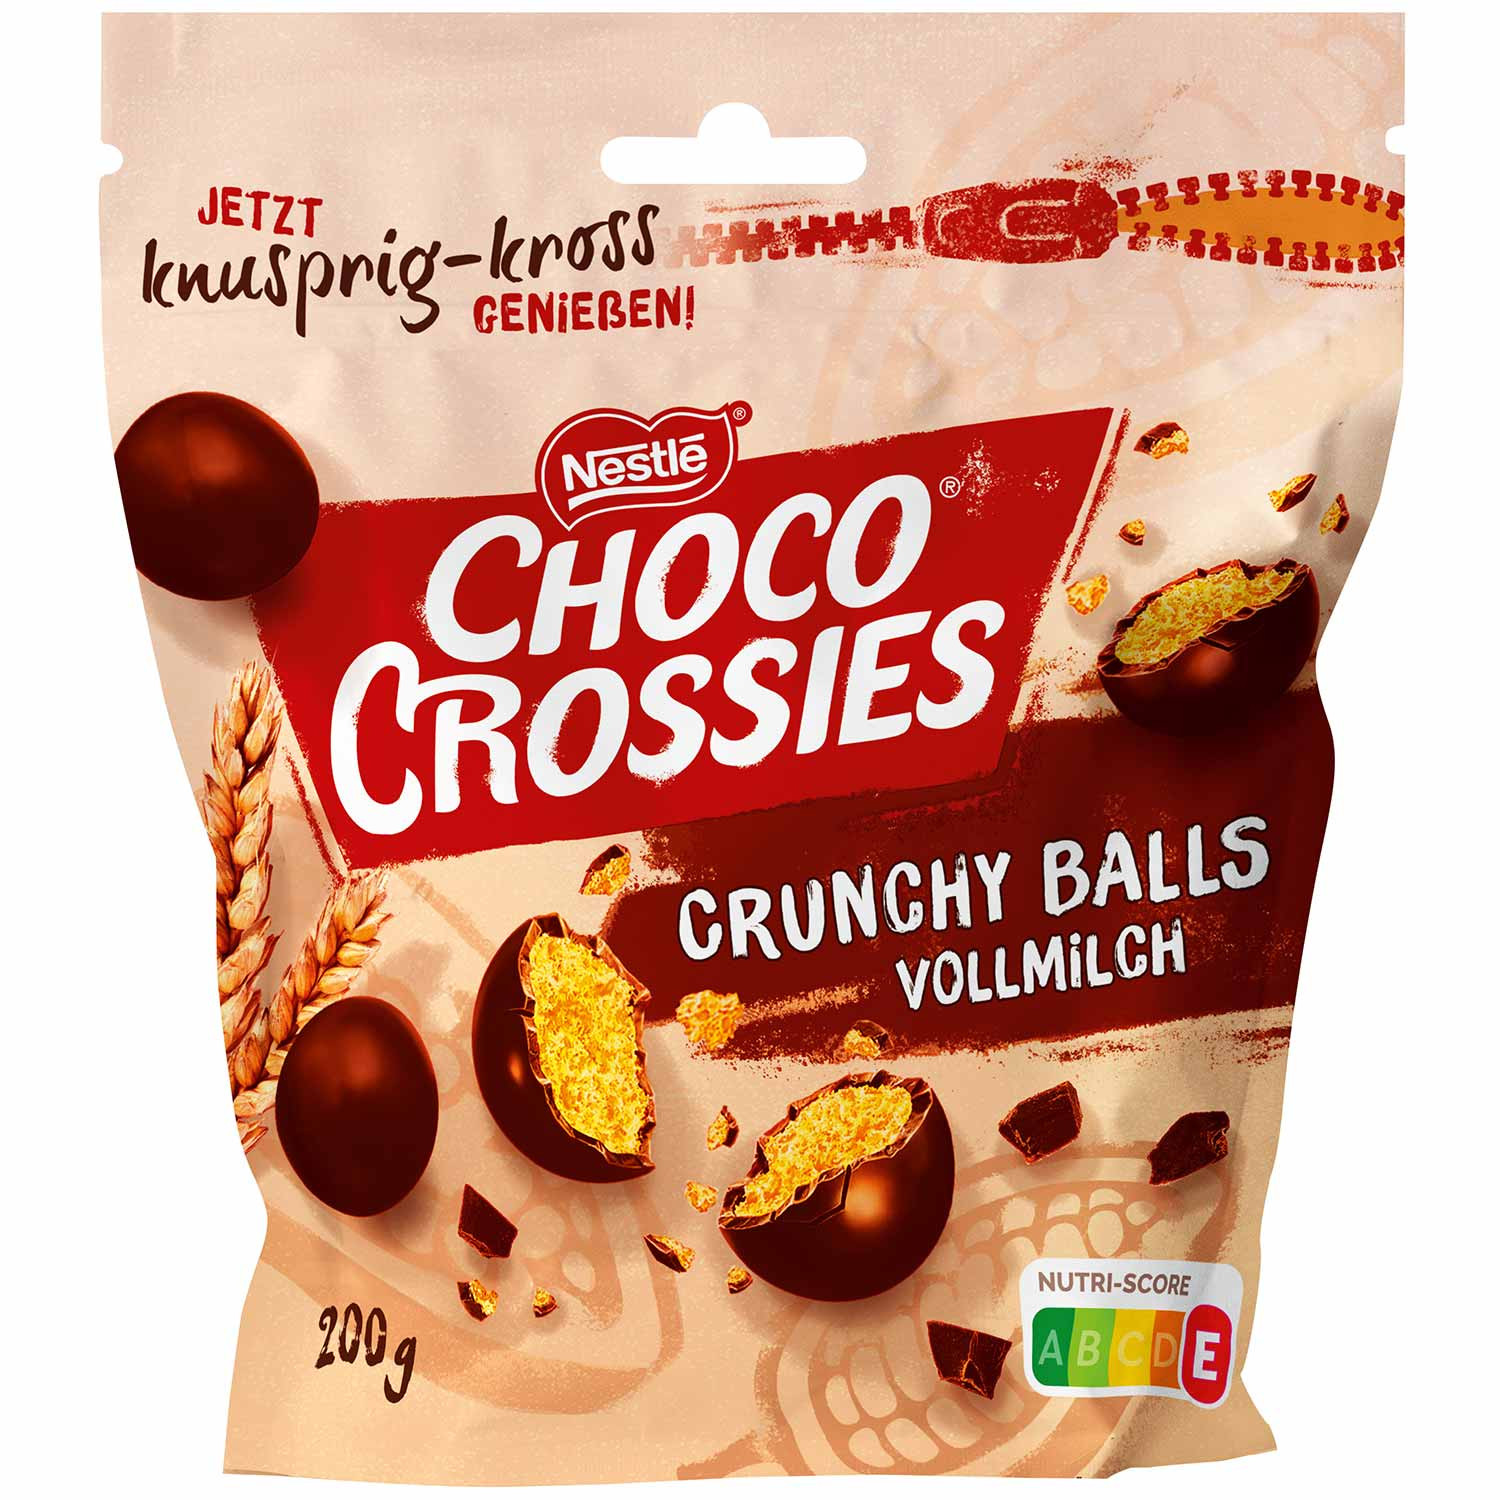 Choco Crossies Crunchy Balls Vollmilch 200g 